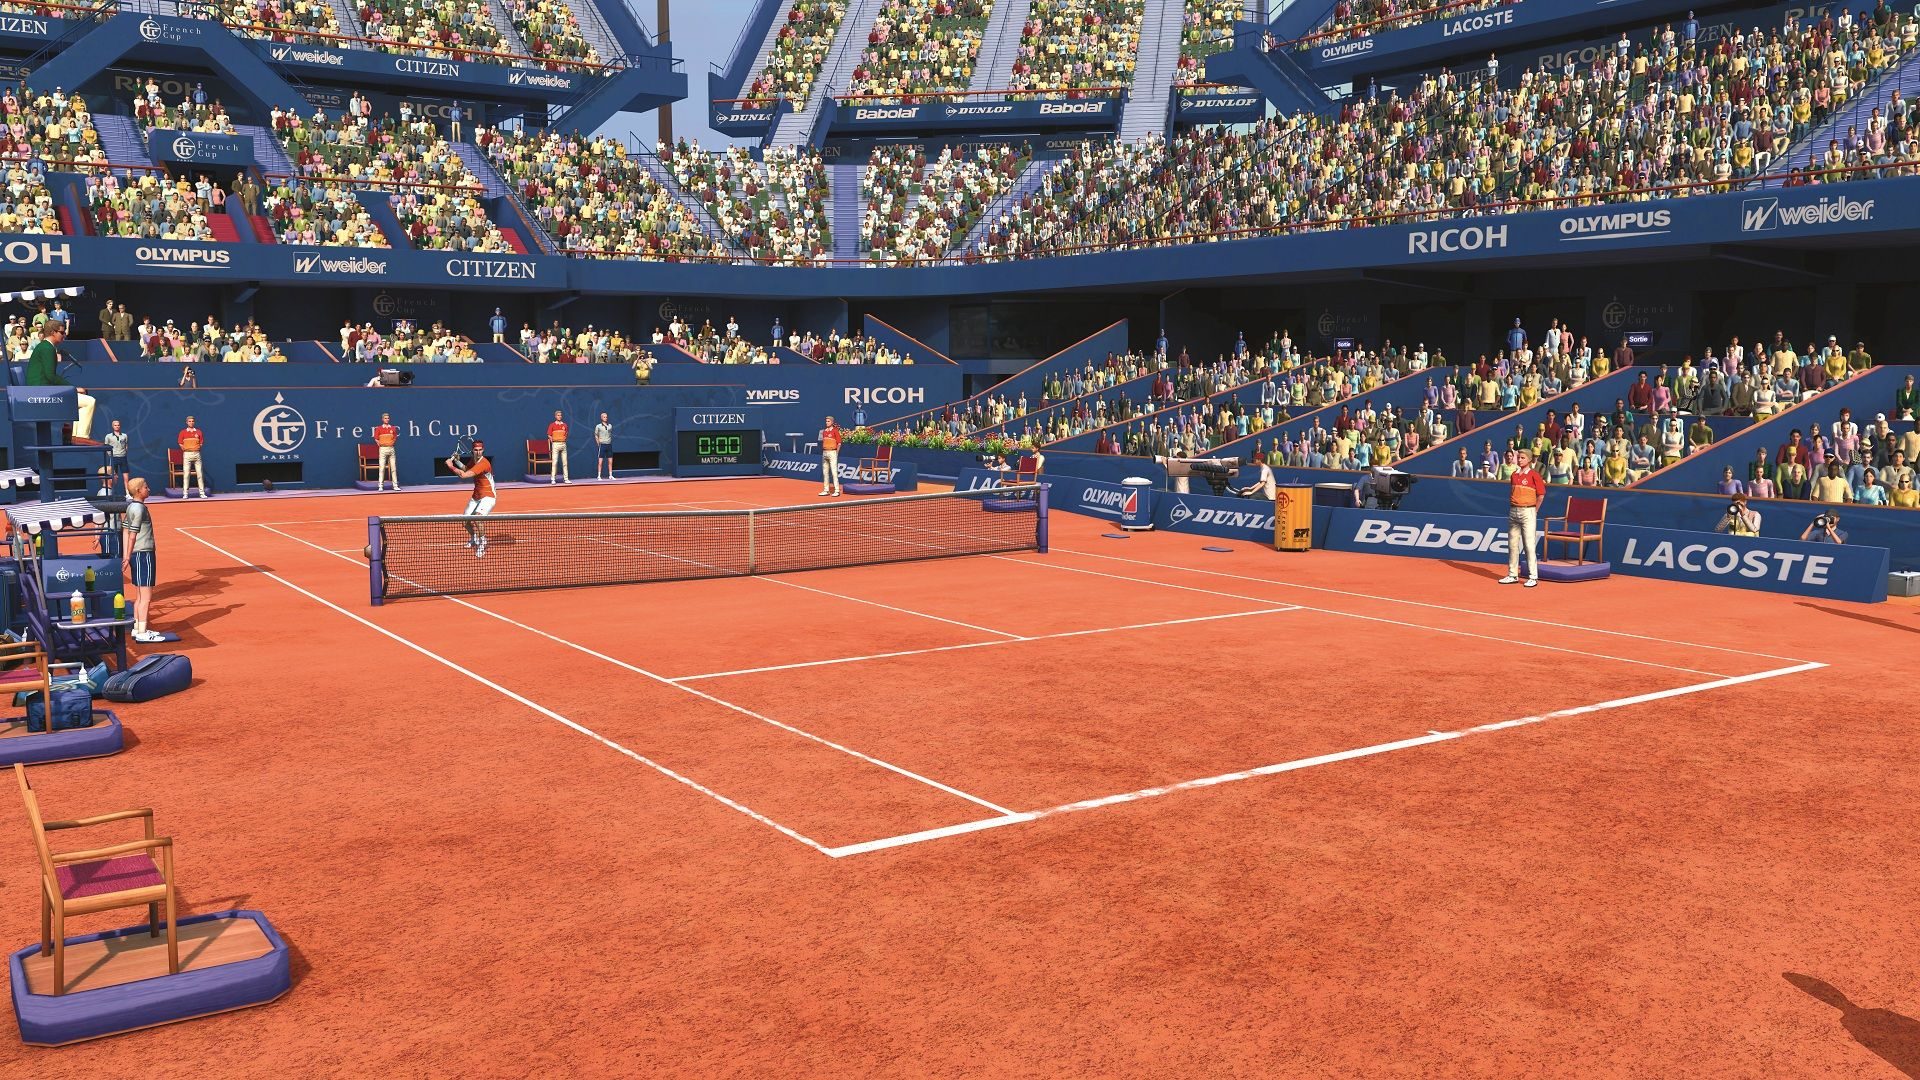 virtua tennis 4 pc game download